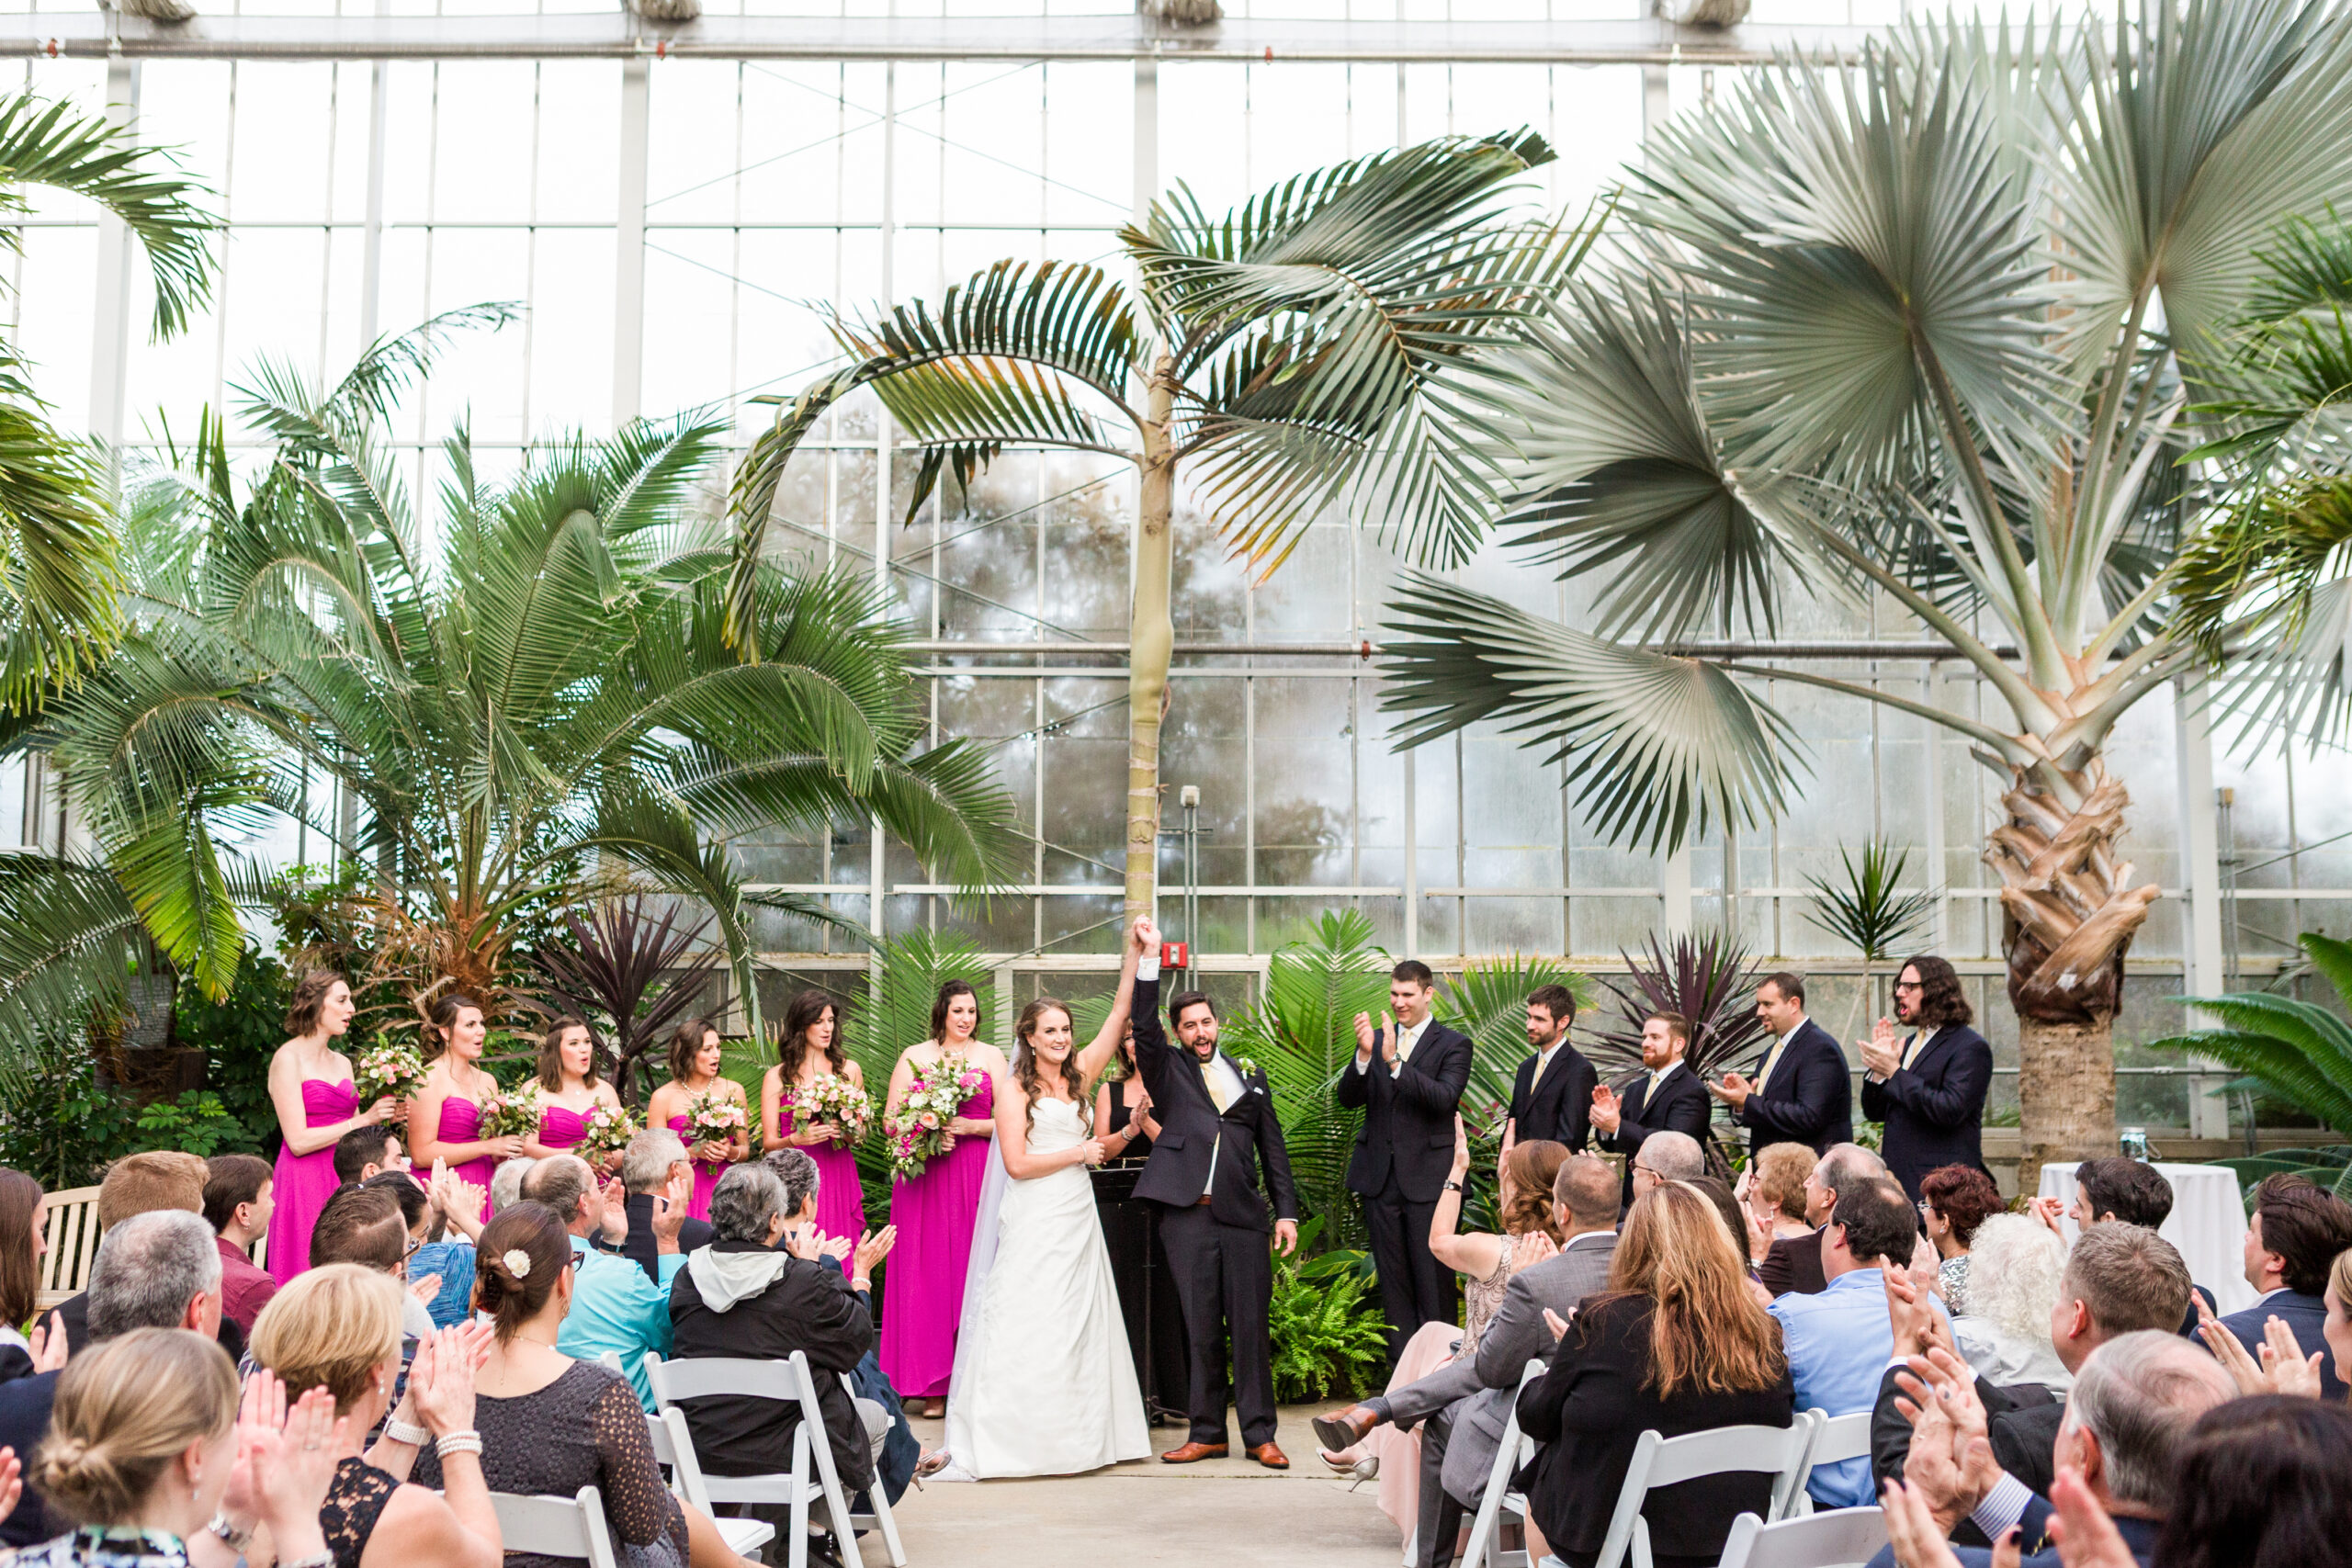 Wedding ceremony at the Roger Williams Botanical Center.